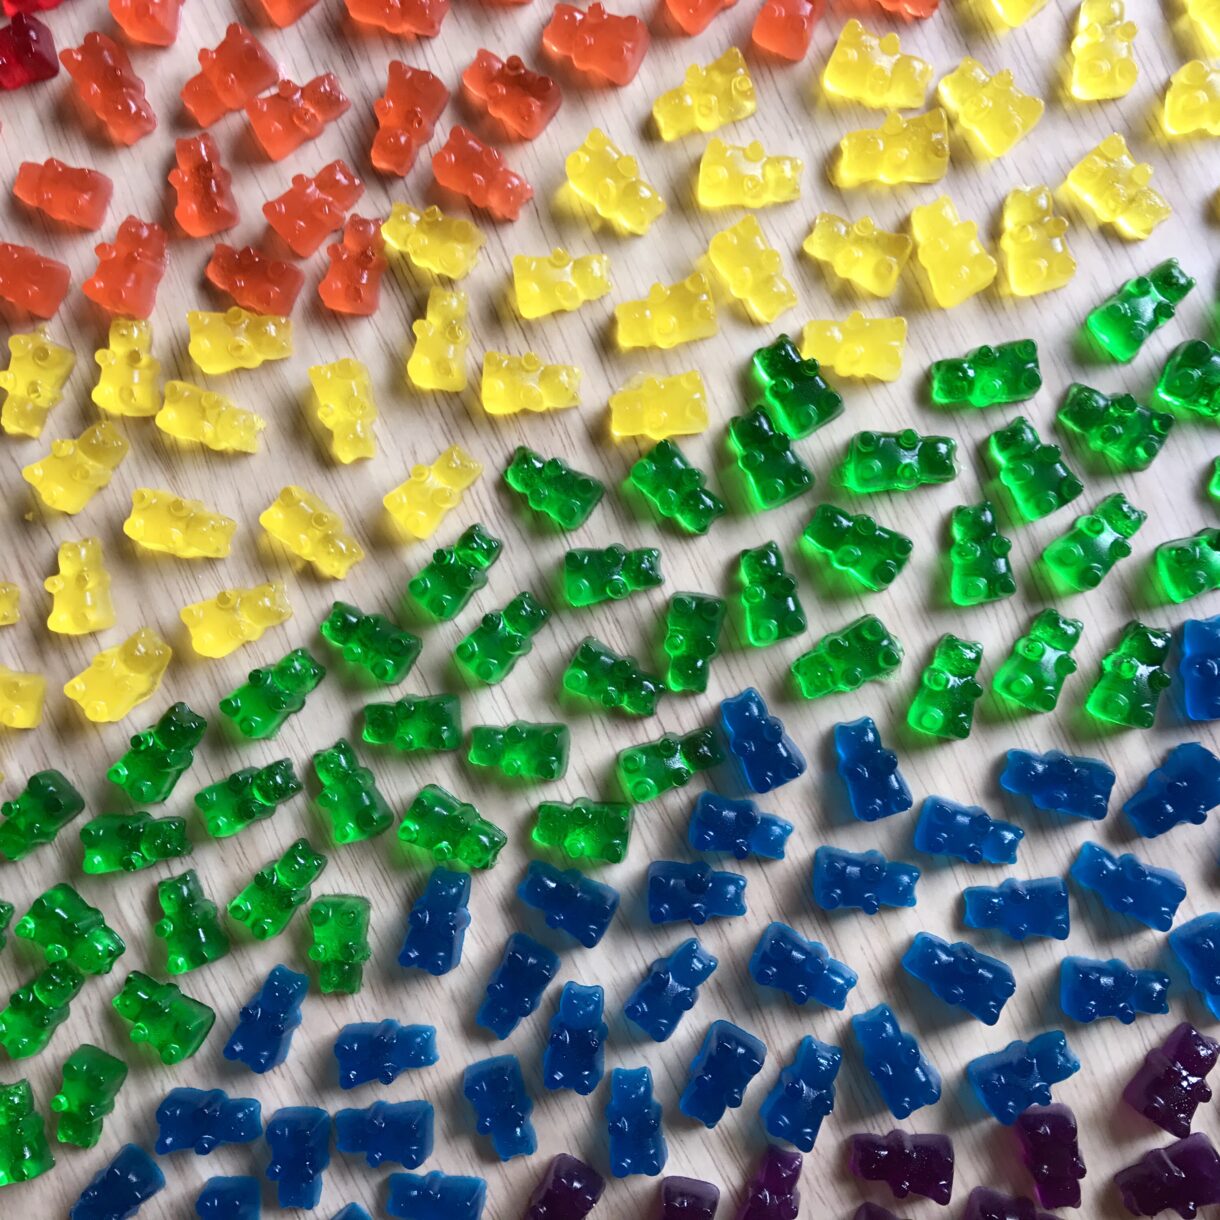 Rainbow gummy bears made from an easy gummy bear recipe using Jello